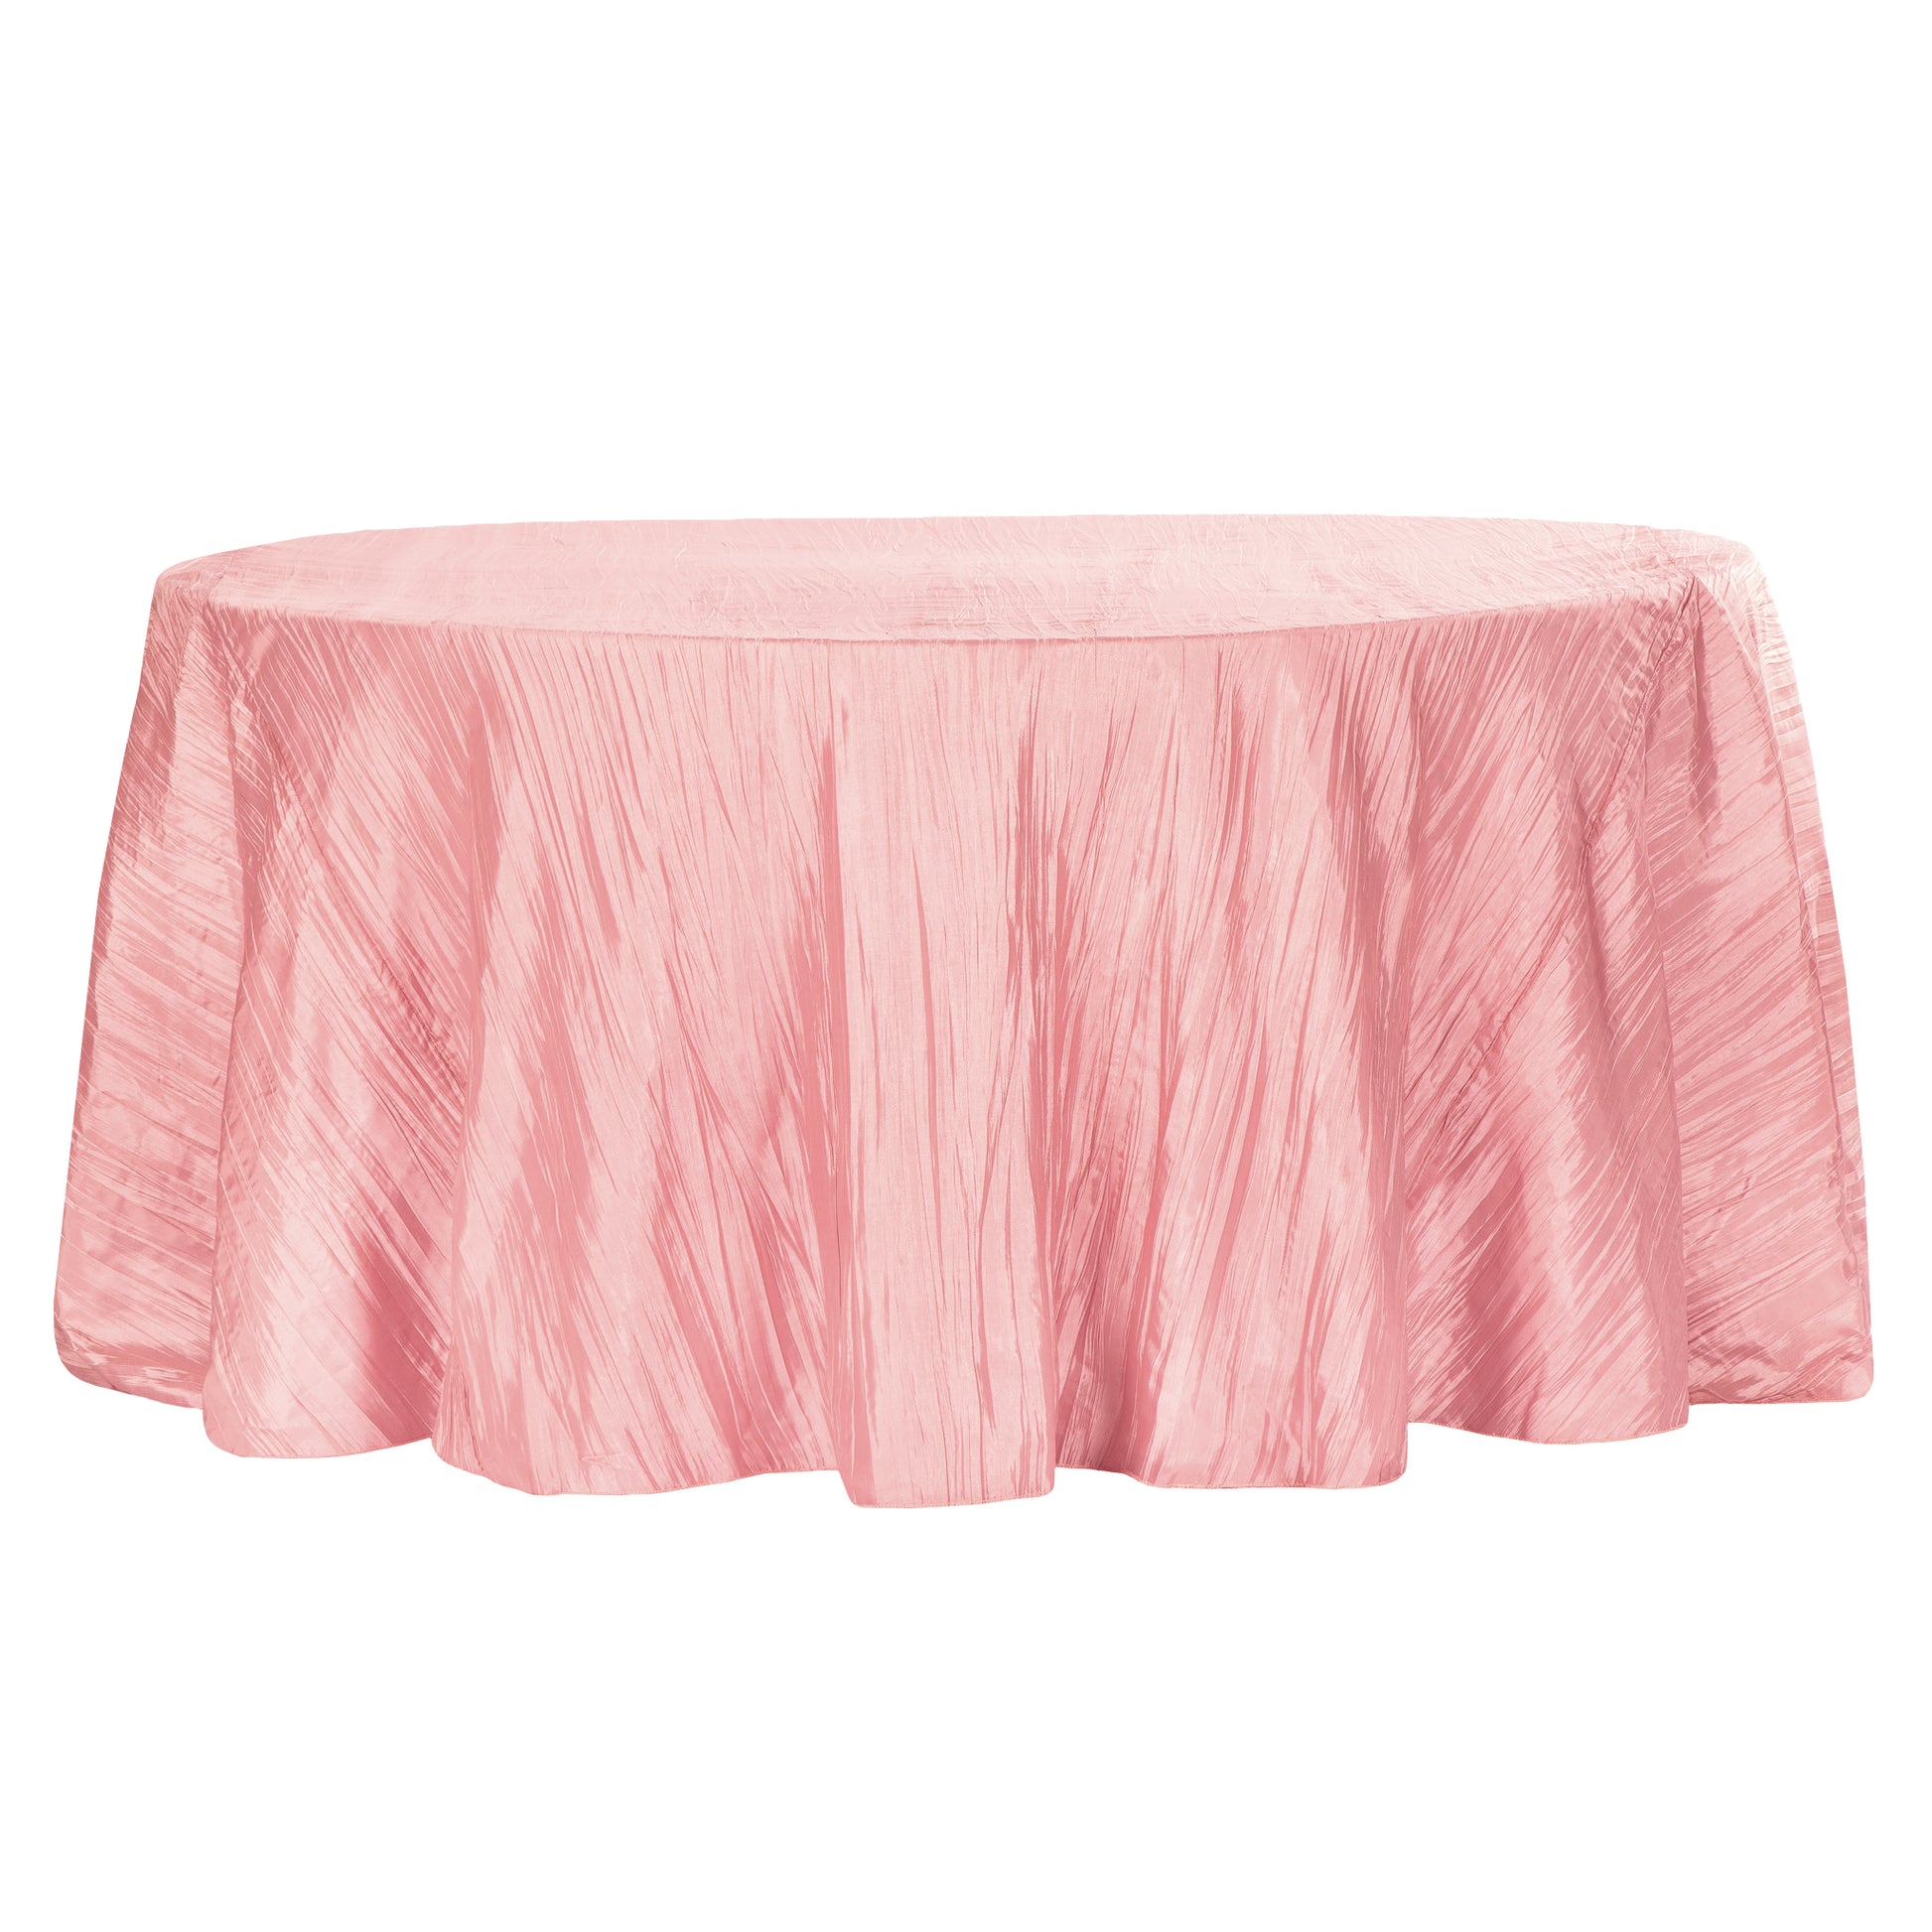 Accordion Crinkle Taffeta 120" Round Tablecloth - Dusty Rose/Mauve - CV Linens